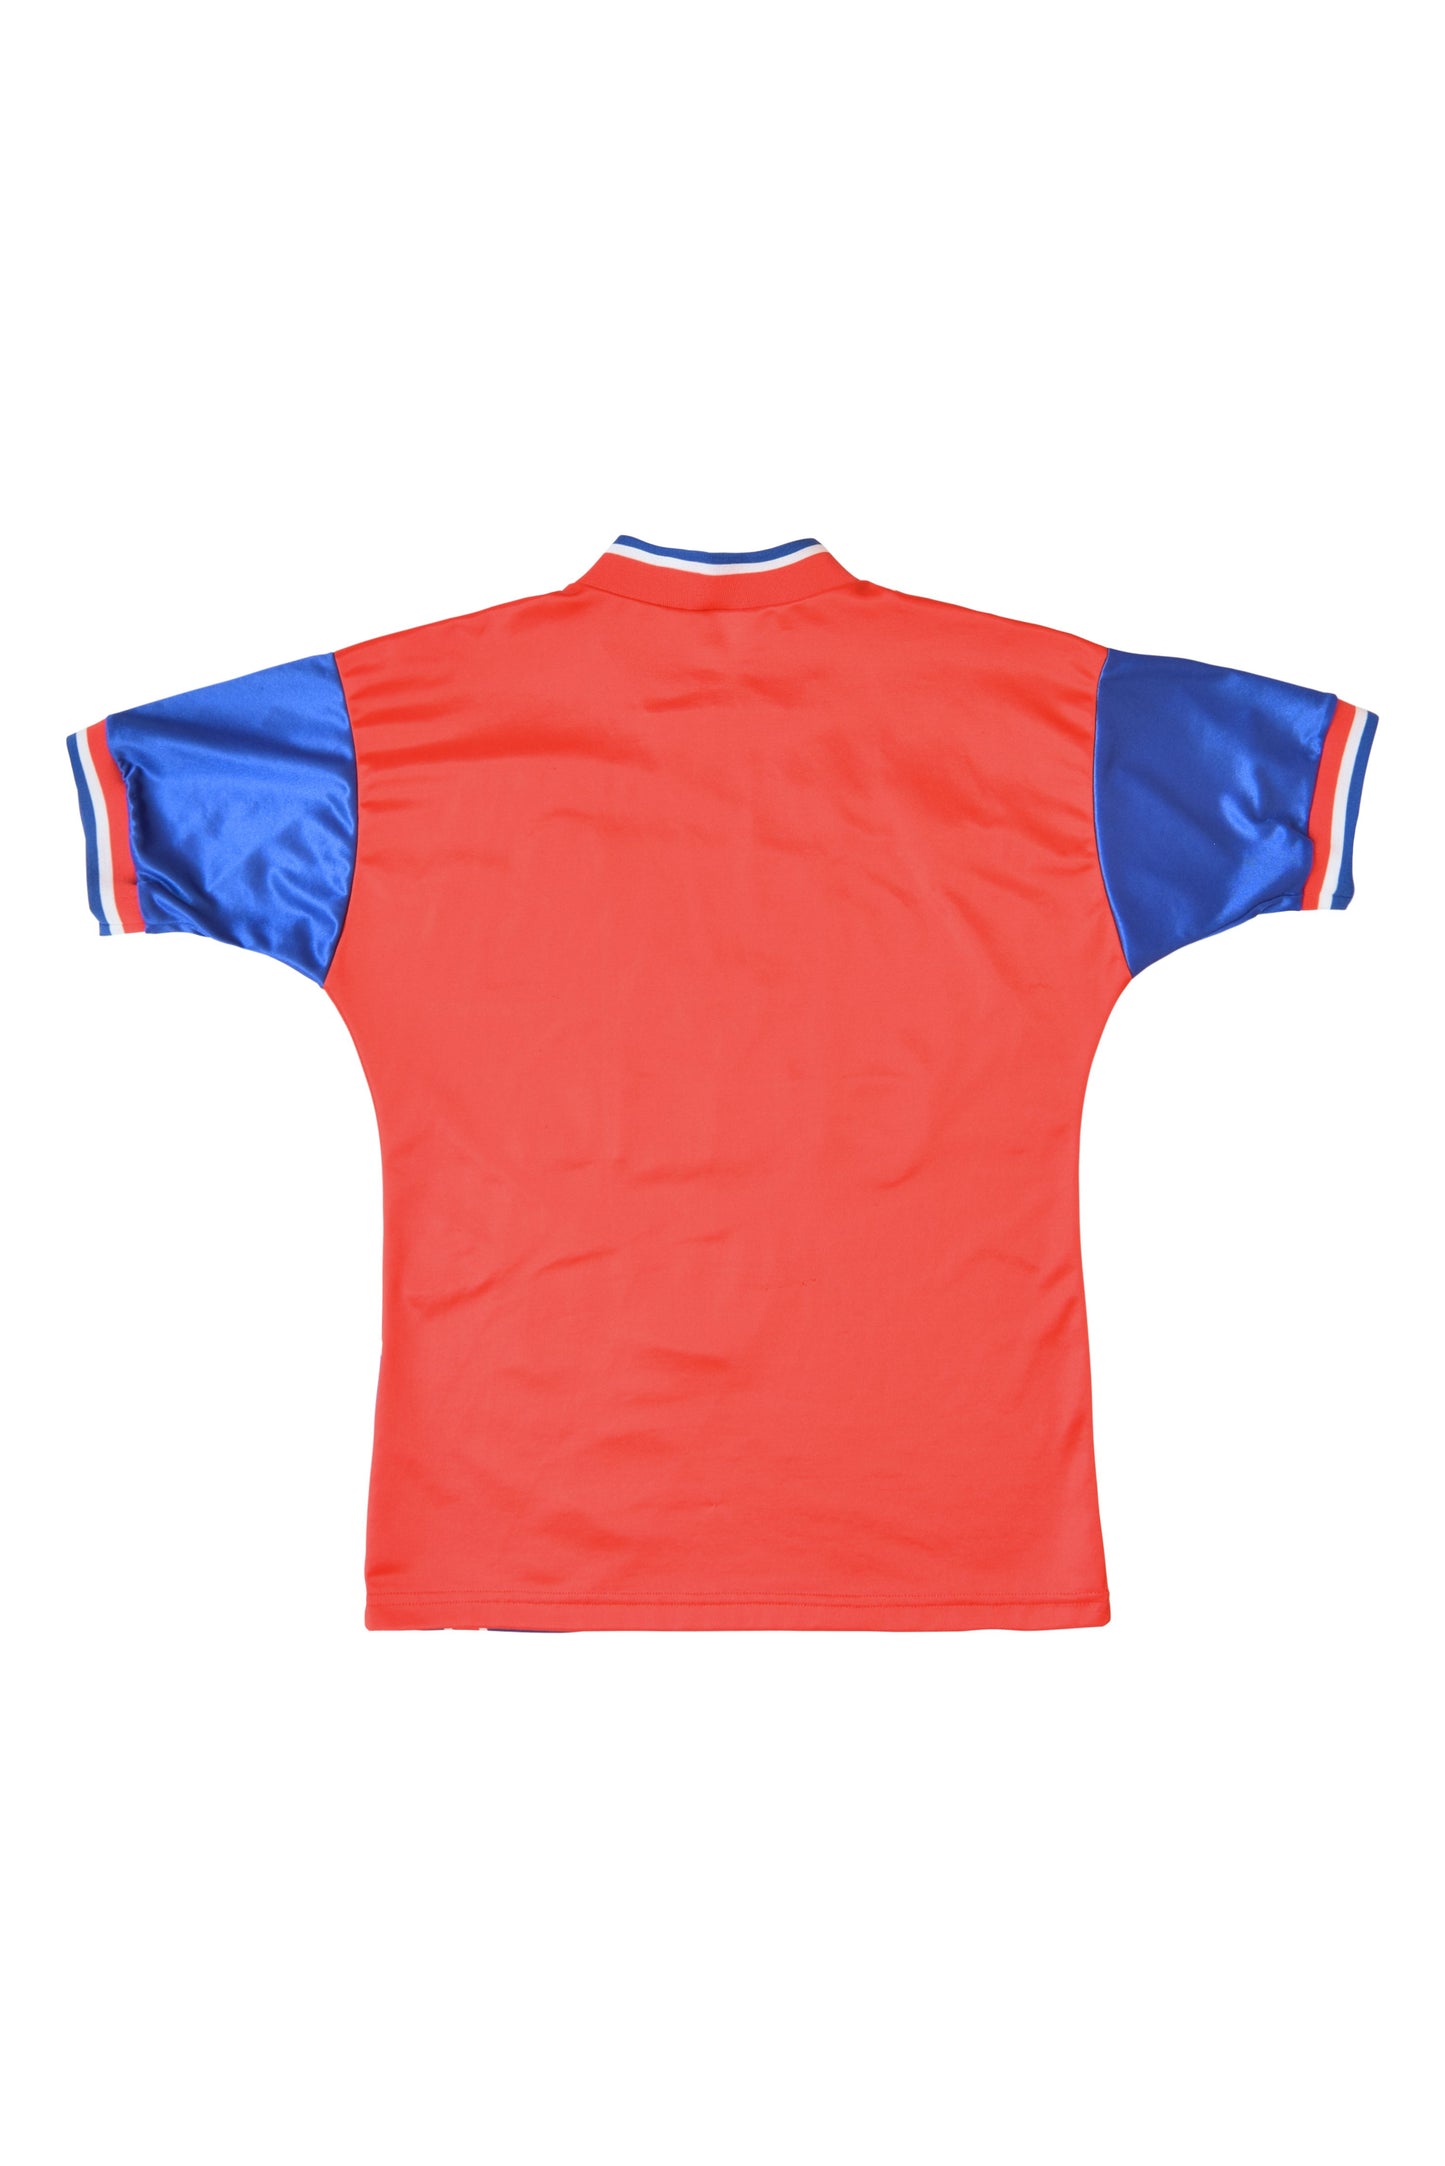  Vintage Adidas Equipment Bayern Munchen Football Shirt Home 1993-1995 Red Opel Size XL